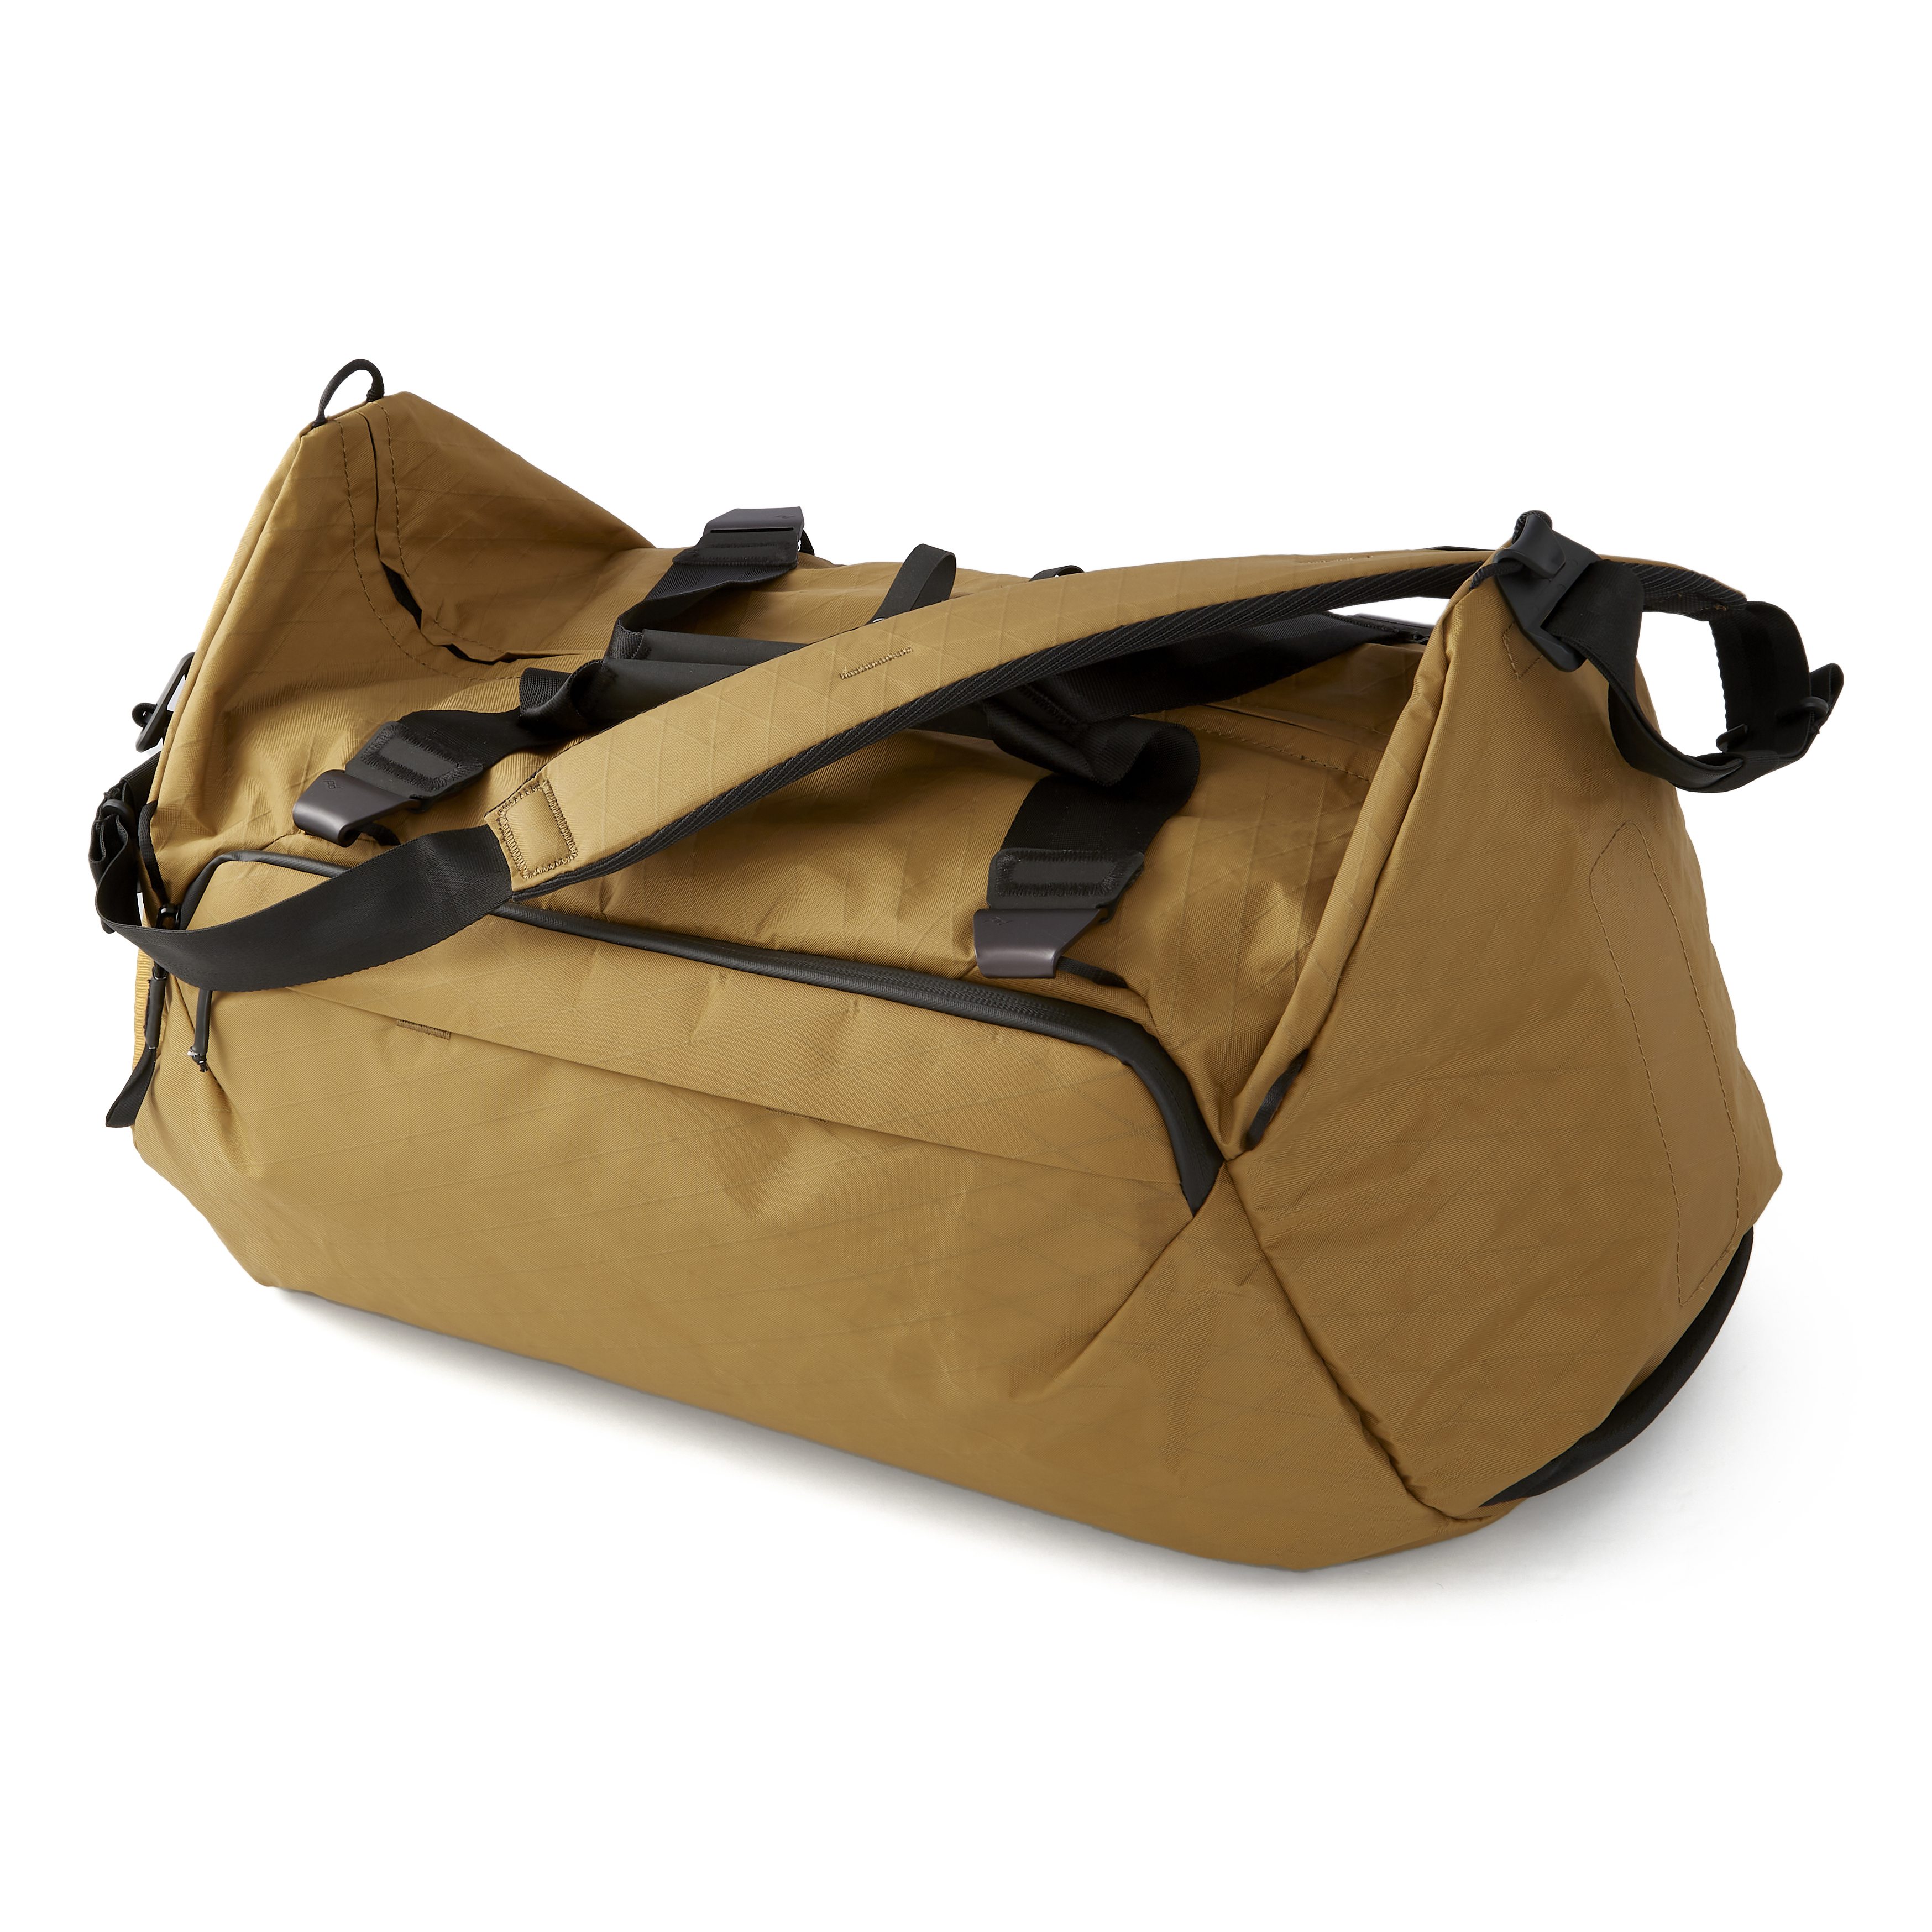 Huckberry x Peak Design Travel Duffel Bag - 35L